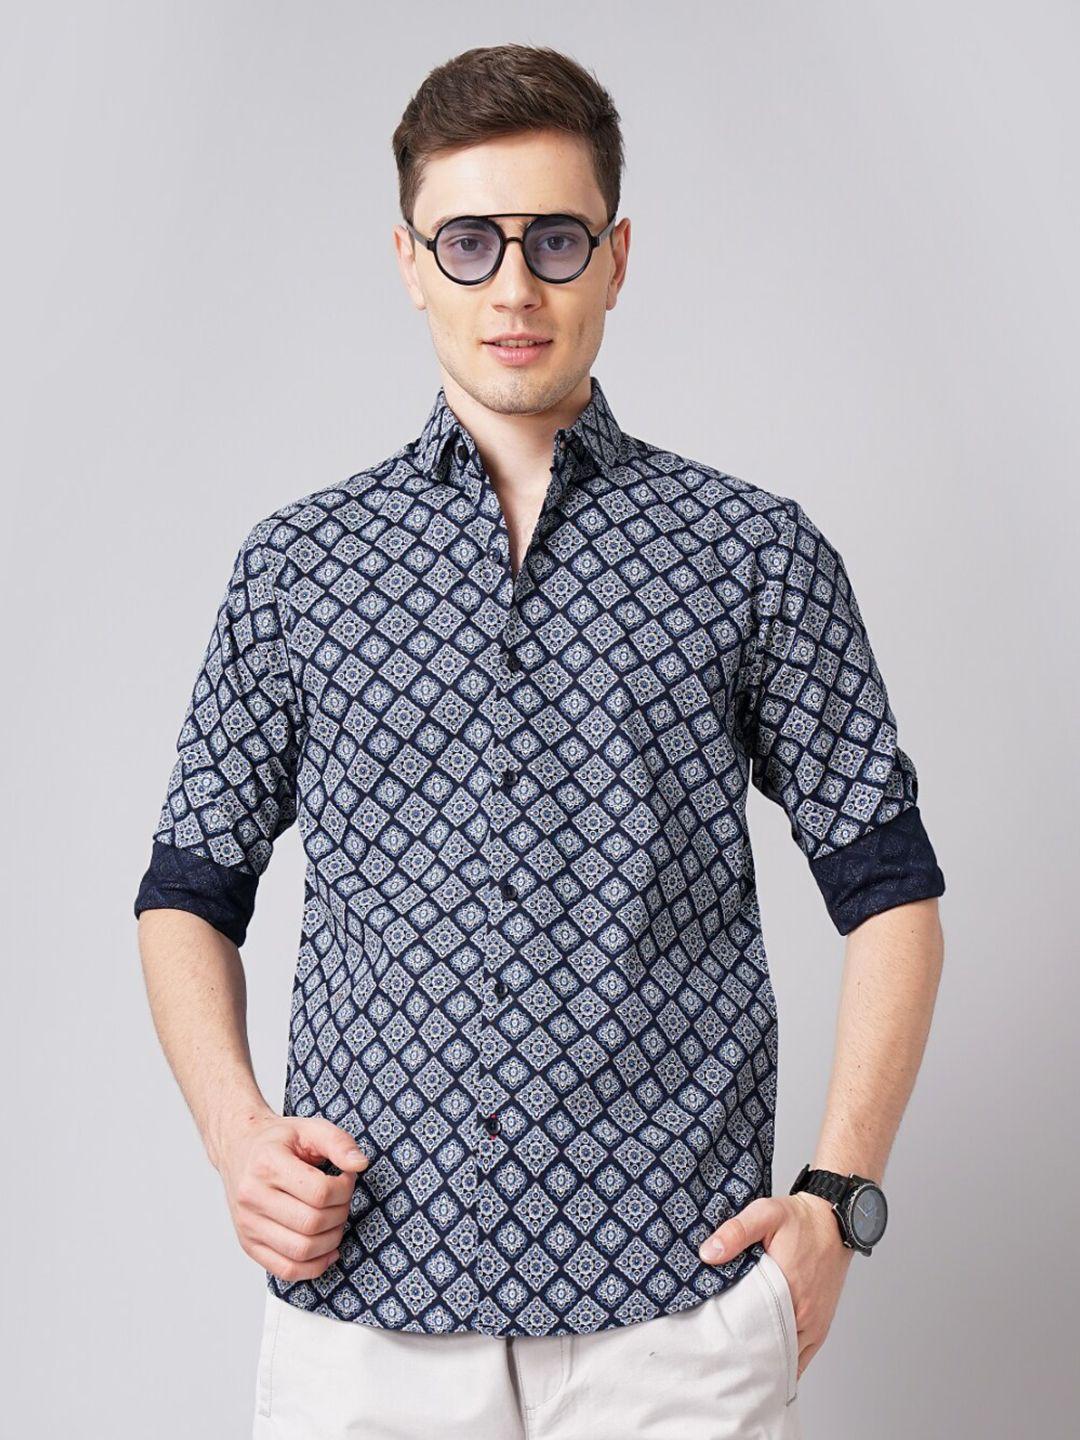 paul street standard ethnic motifs printed cotton casual shirt